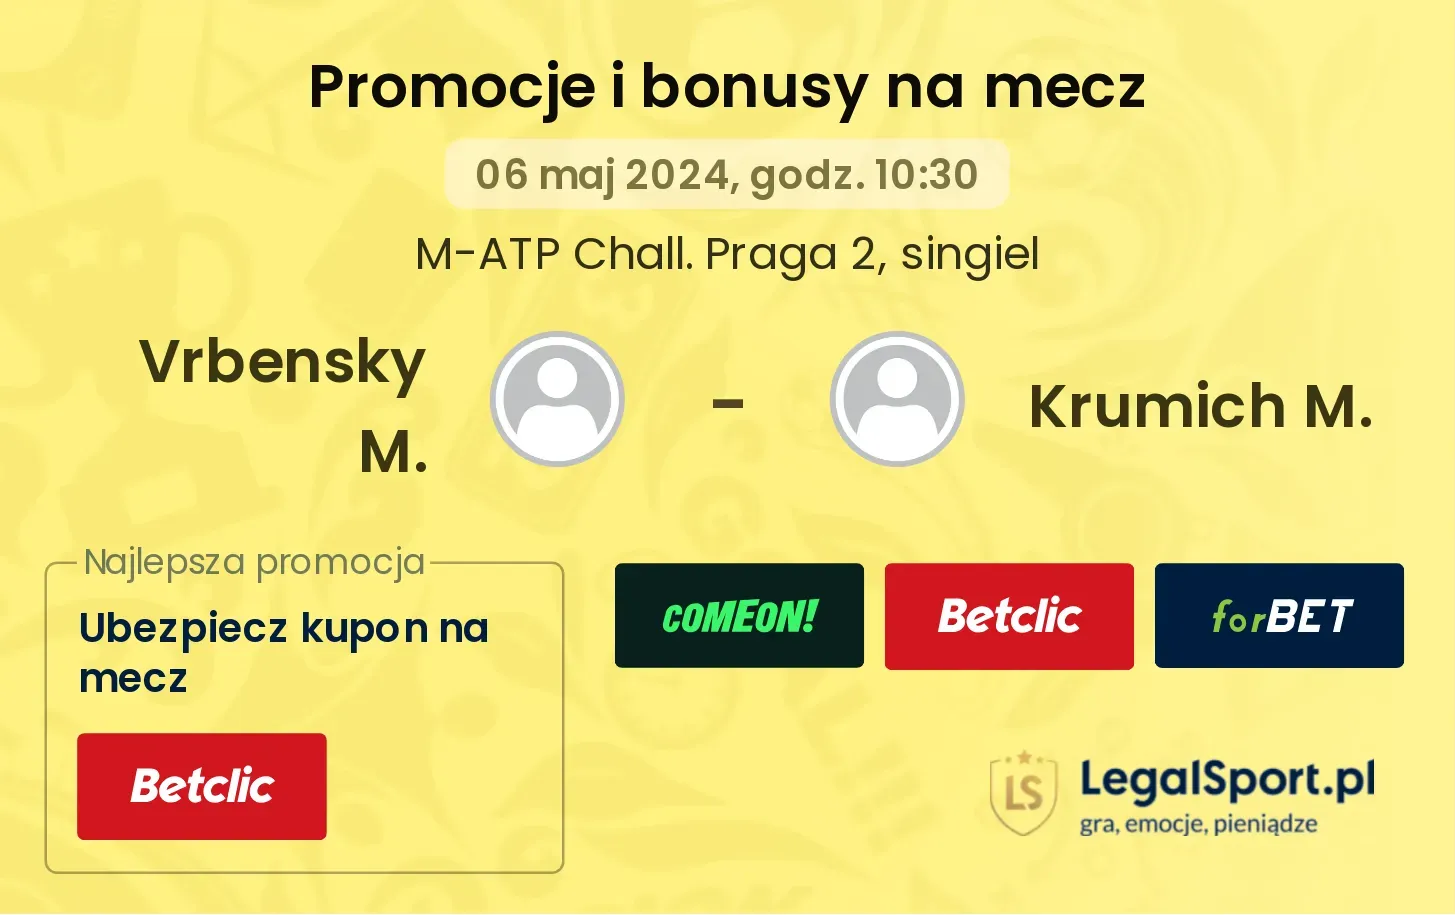 Vrbensky M. - Krumich M. promocje bonusy na mecz